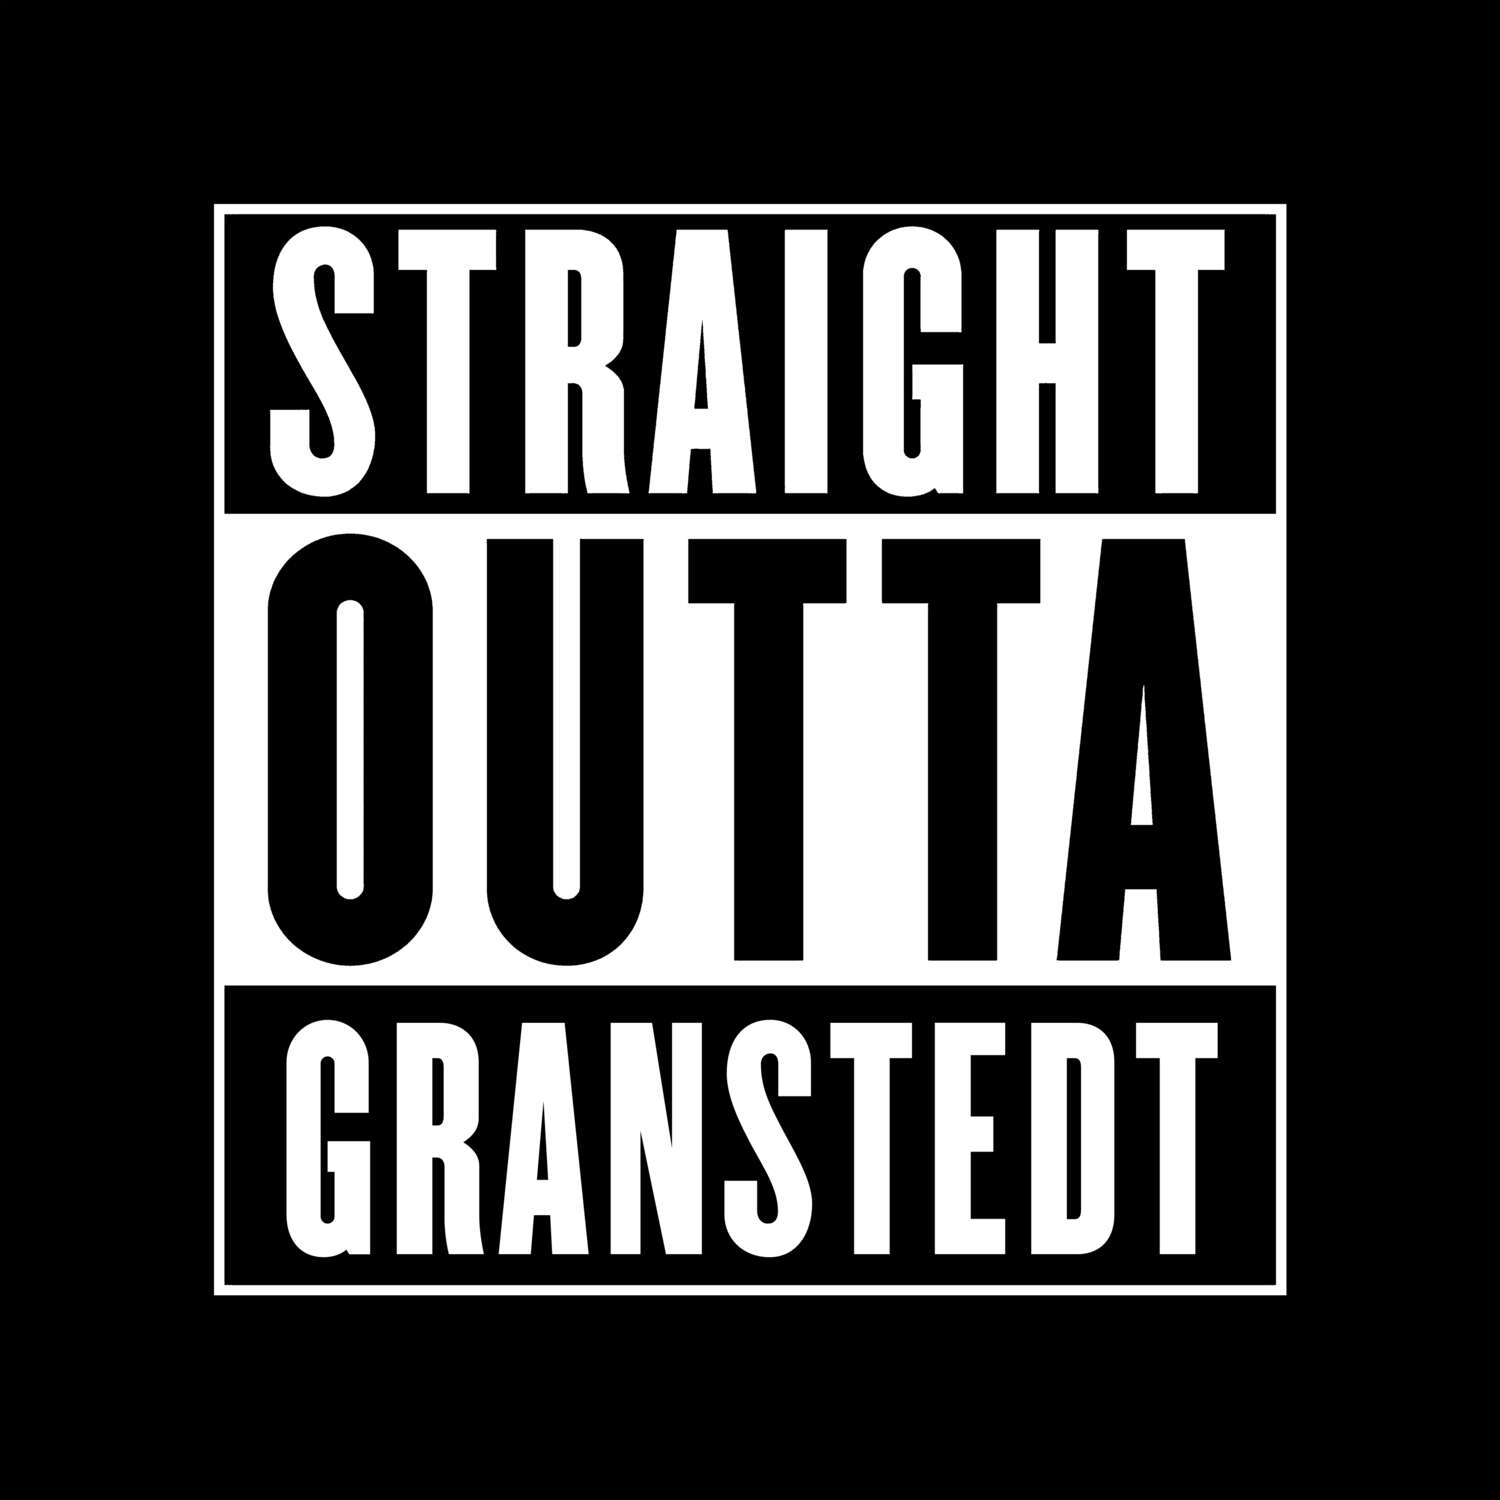 Granstedt T-Shirt »Straight Outta«